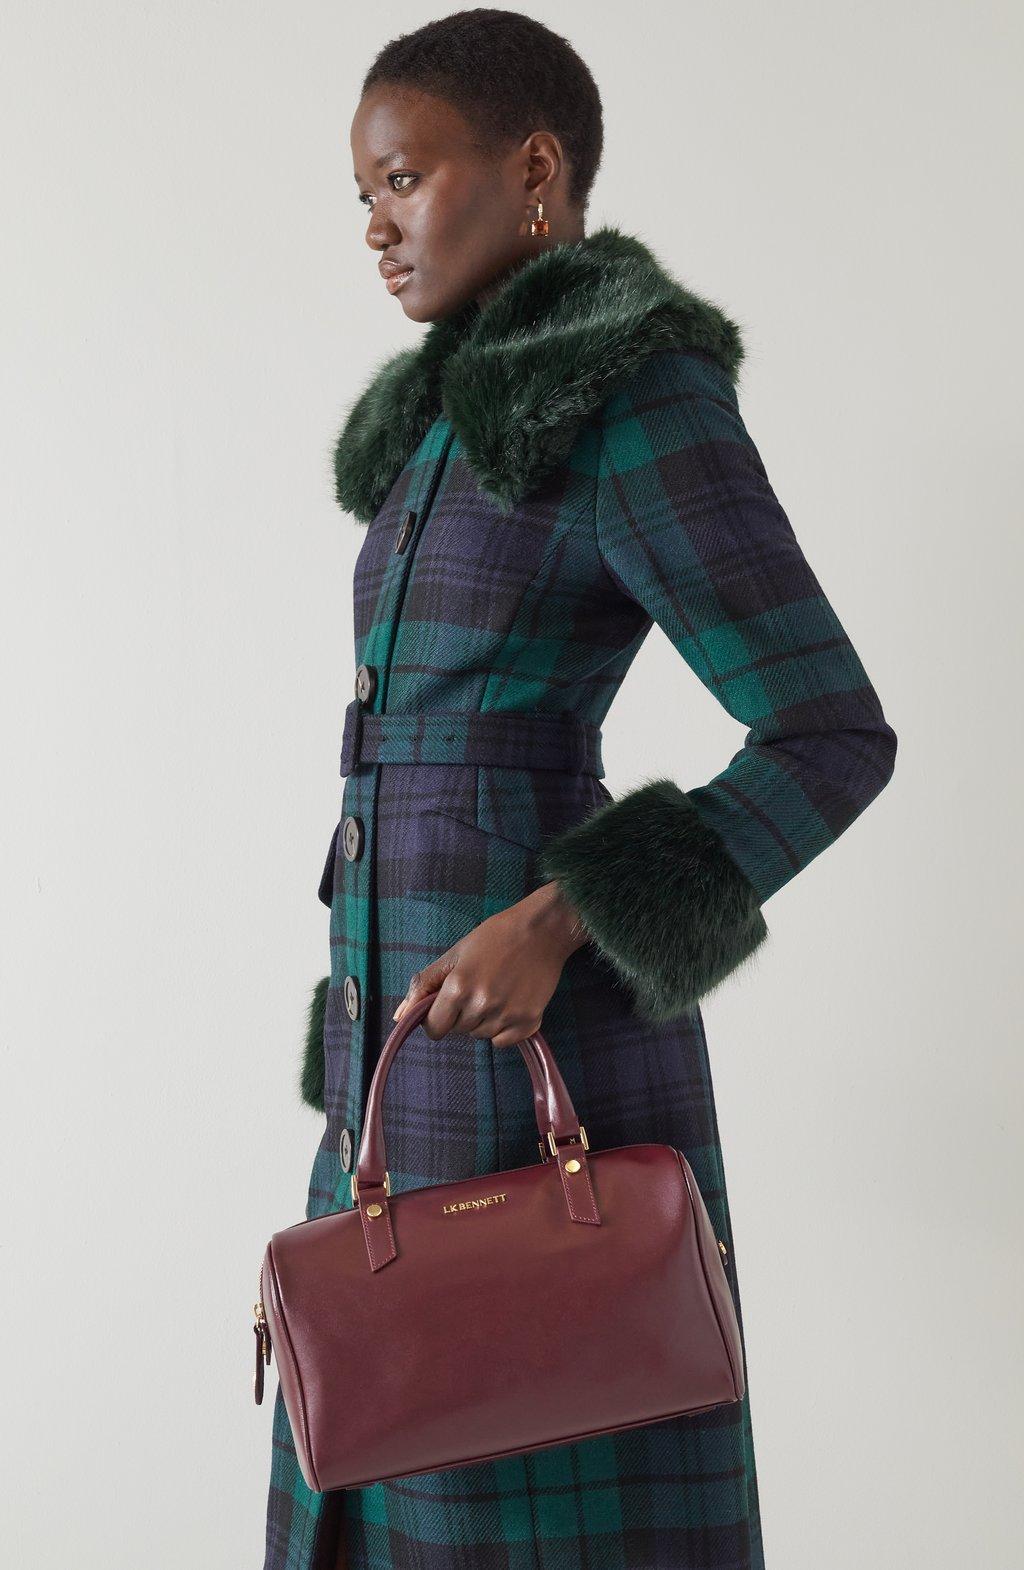 Luxury Totes for Women - Women's Designer Tote Bags - LOUIS